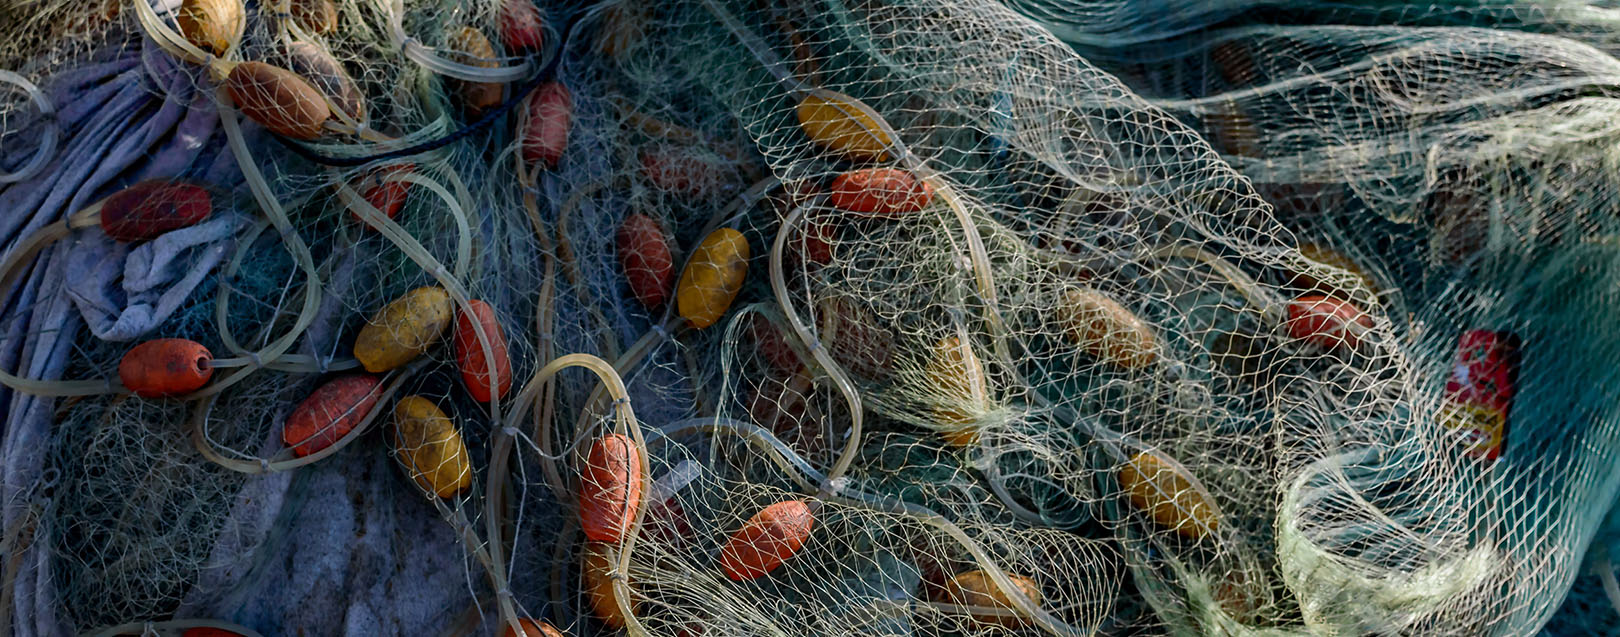 Industry seeks anti-dumping duty on fishnets imports